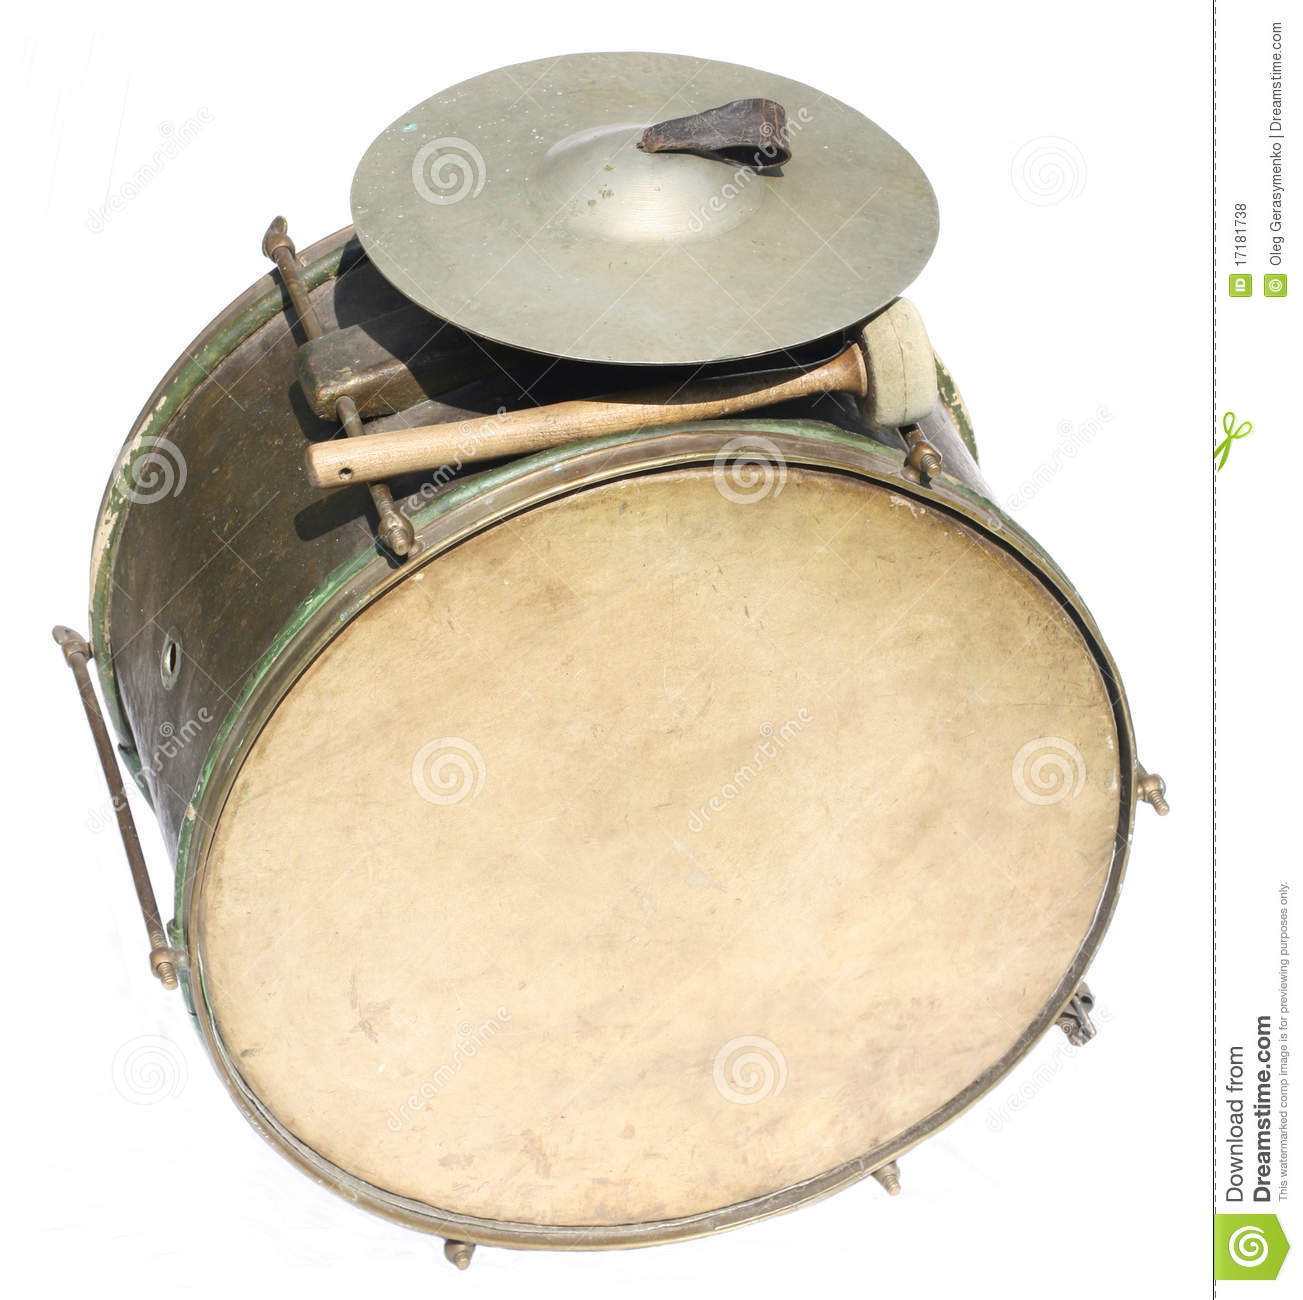 Big Vintage Orchestral Drum Royalty Free Stock Photos   Image